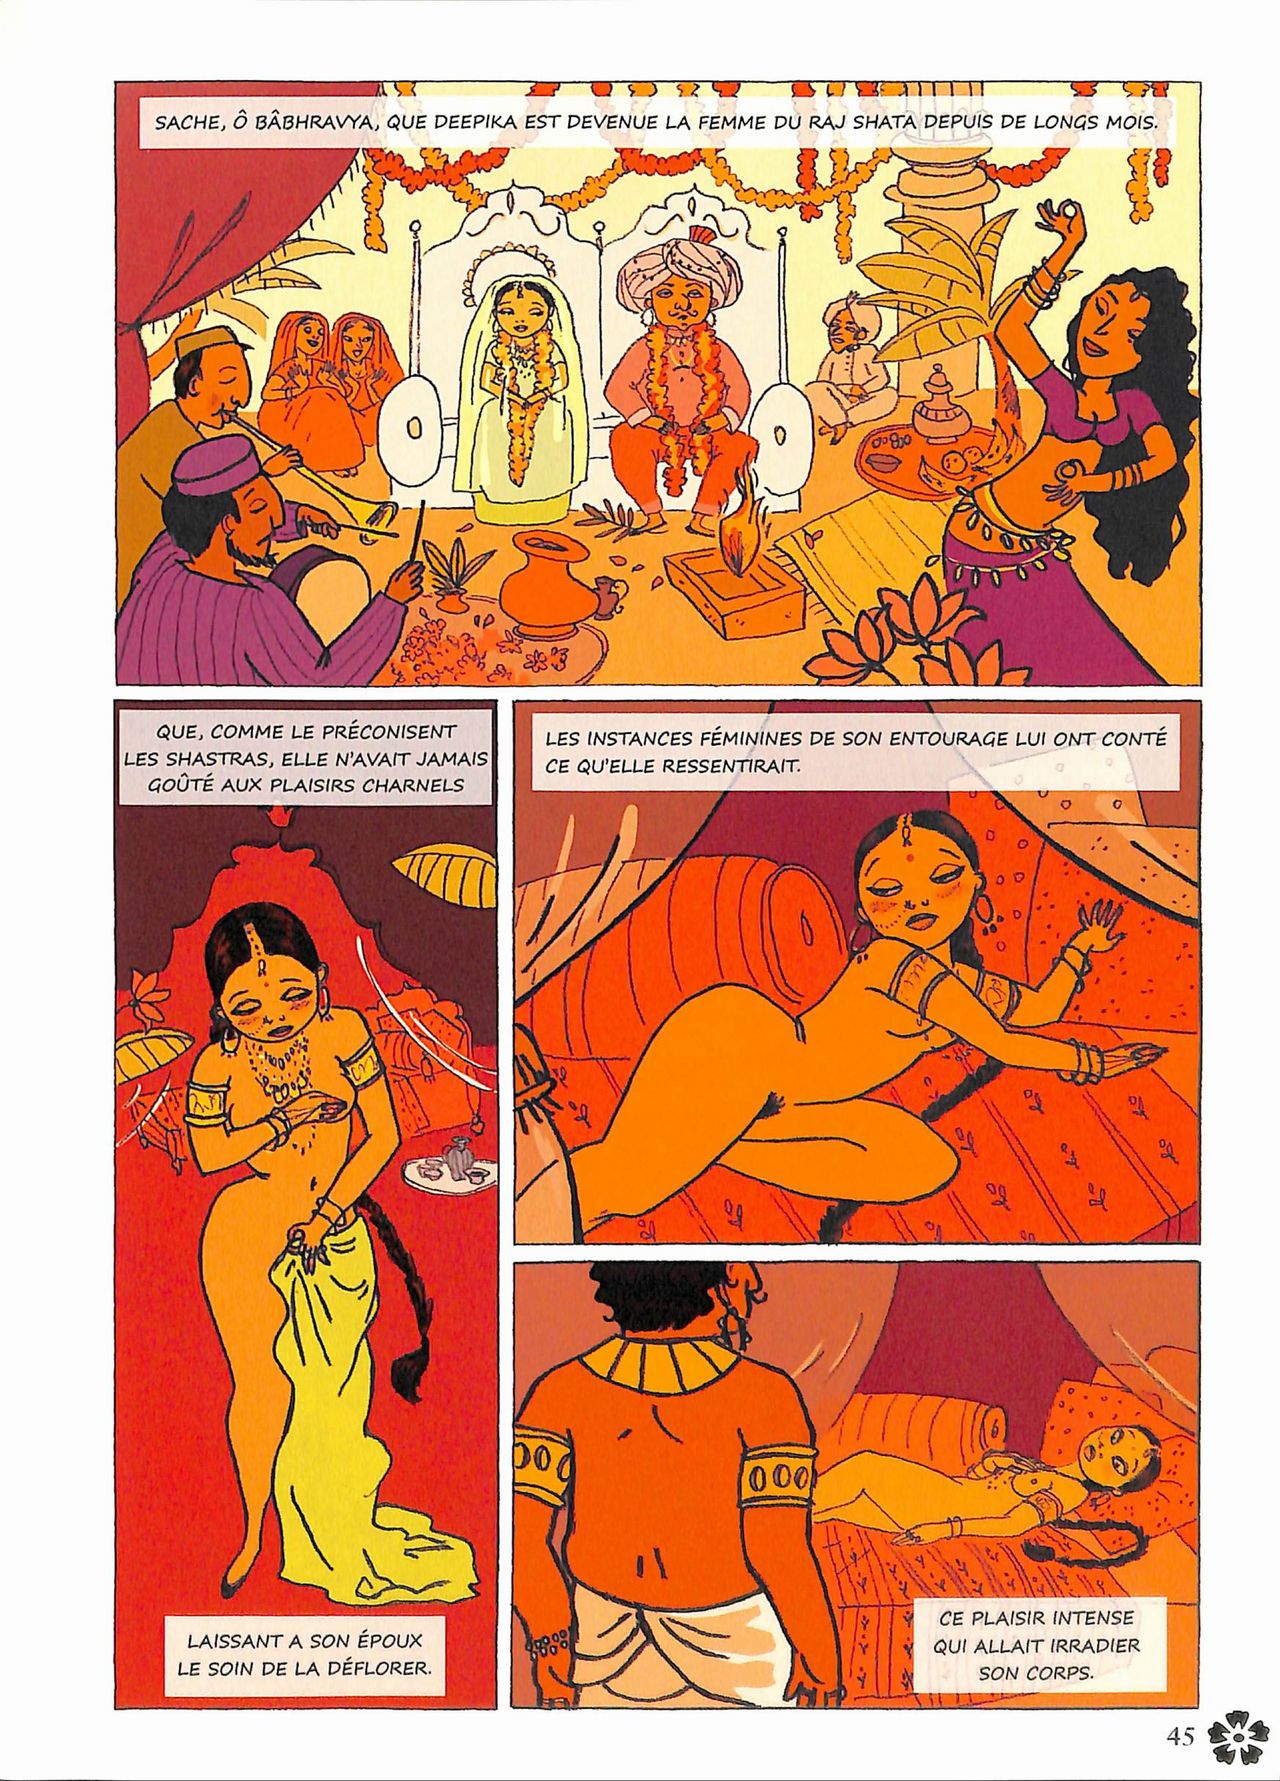 Kama Sutra en bandes dessinées - Kama Sutra with Comics numero d'image 46